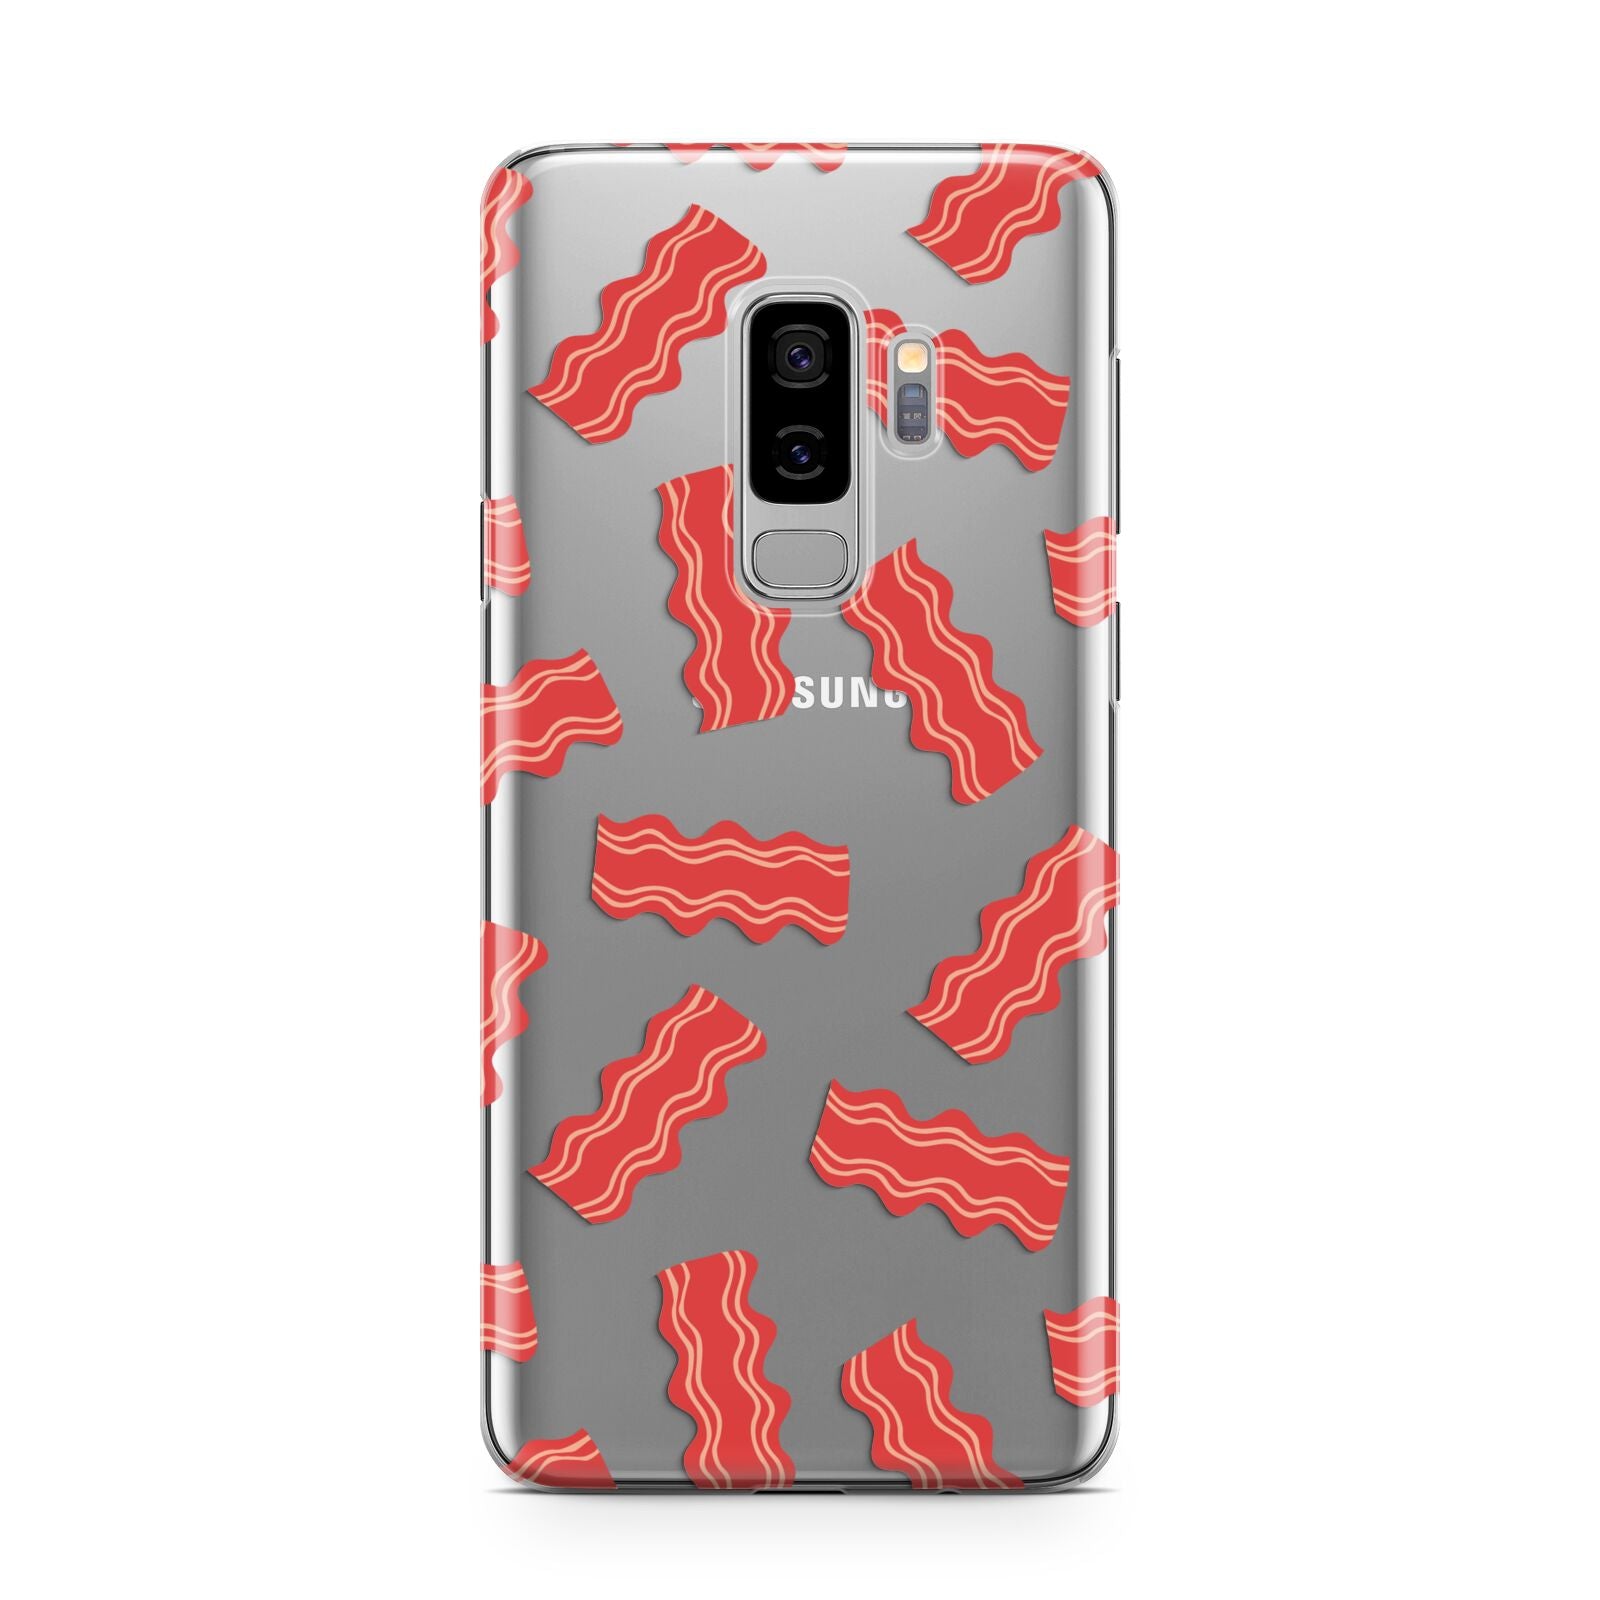 Bacon Samsung Galaxy S9 Plus Case on Silver phone